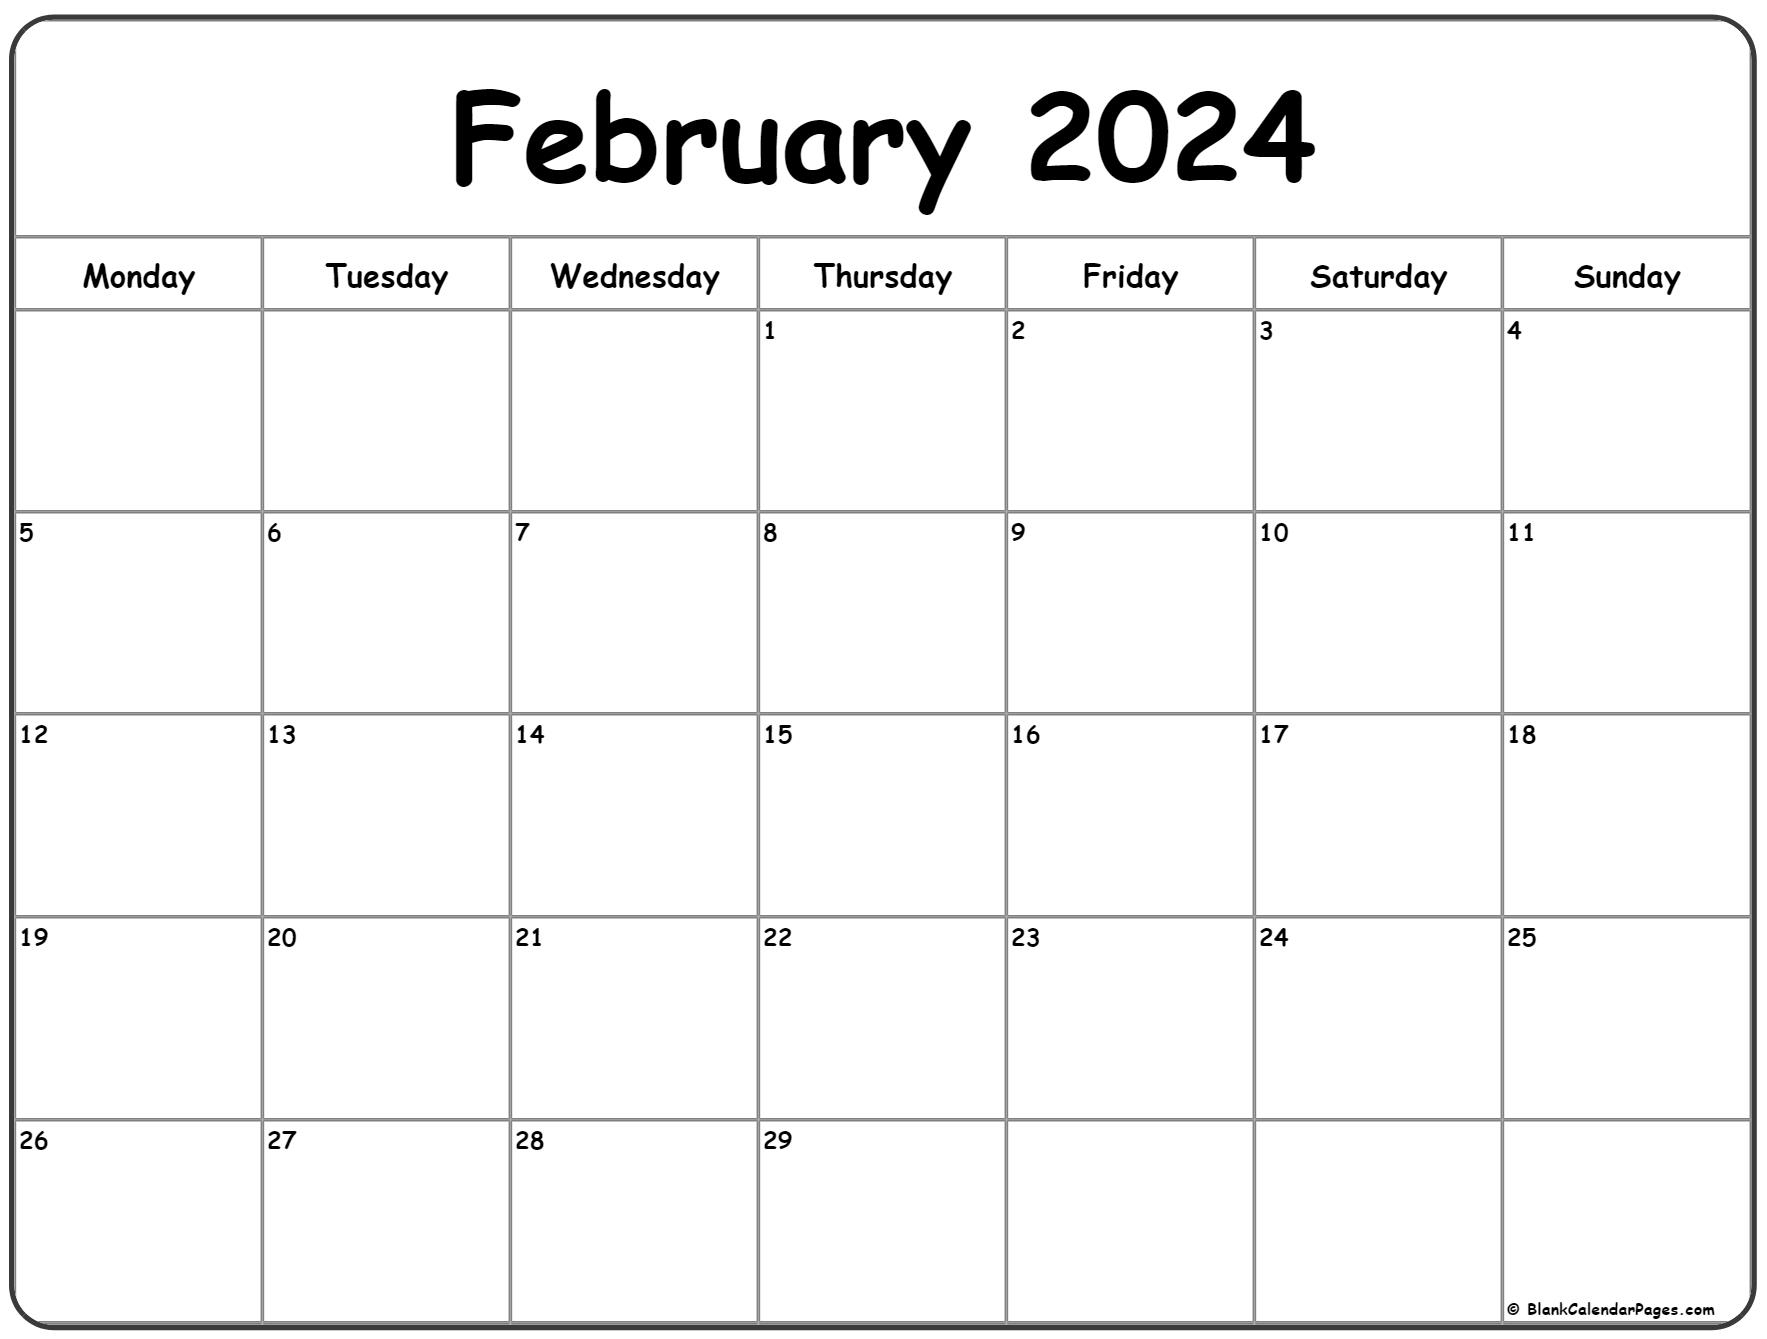 February 2024 Monday Calendar | Monday To Sunday for Free February 2024 Printable Calendar